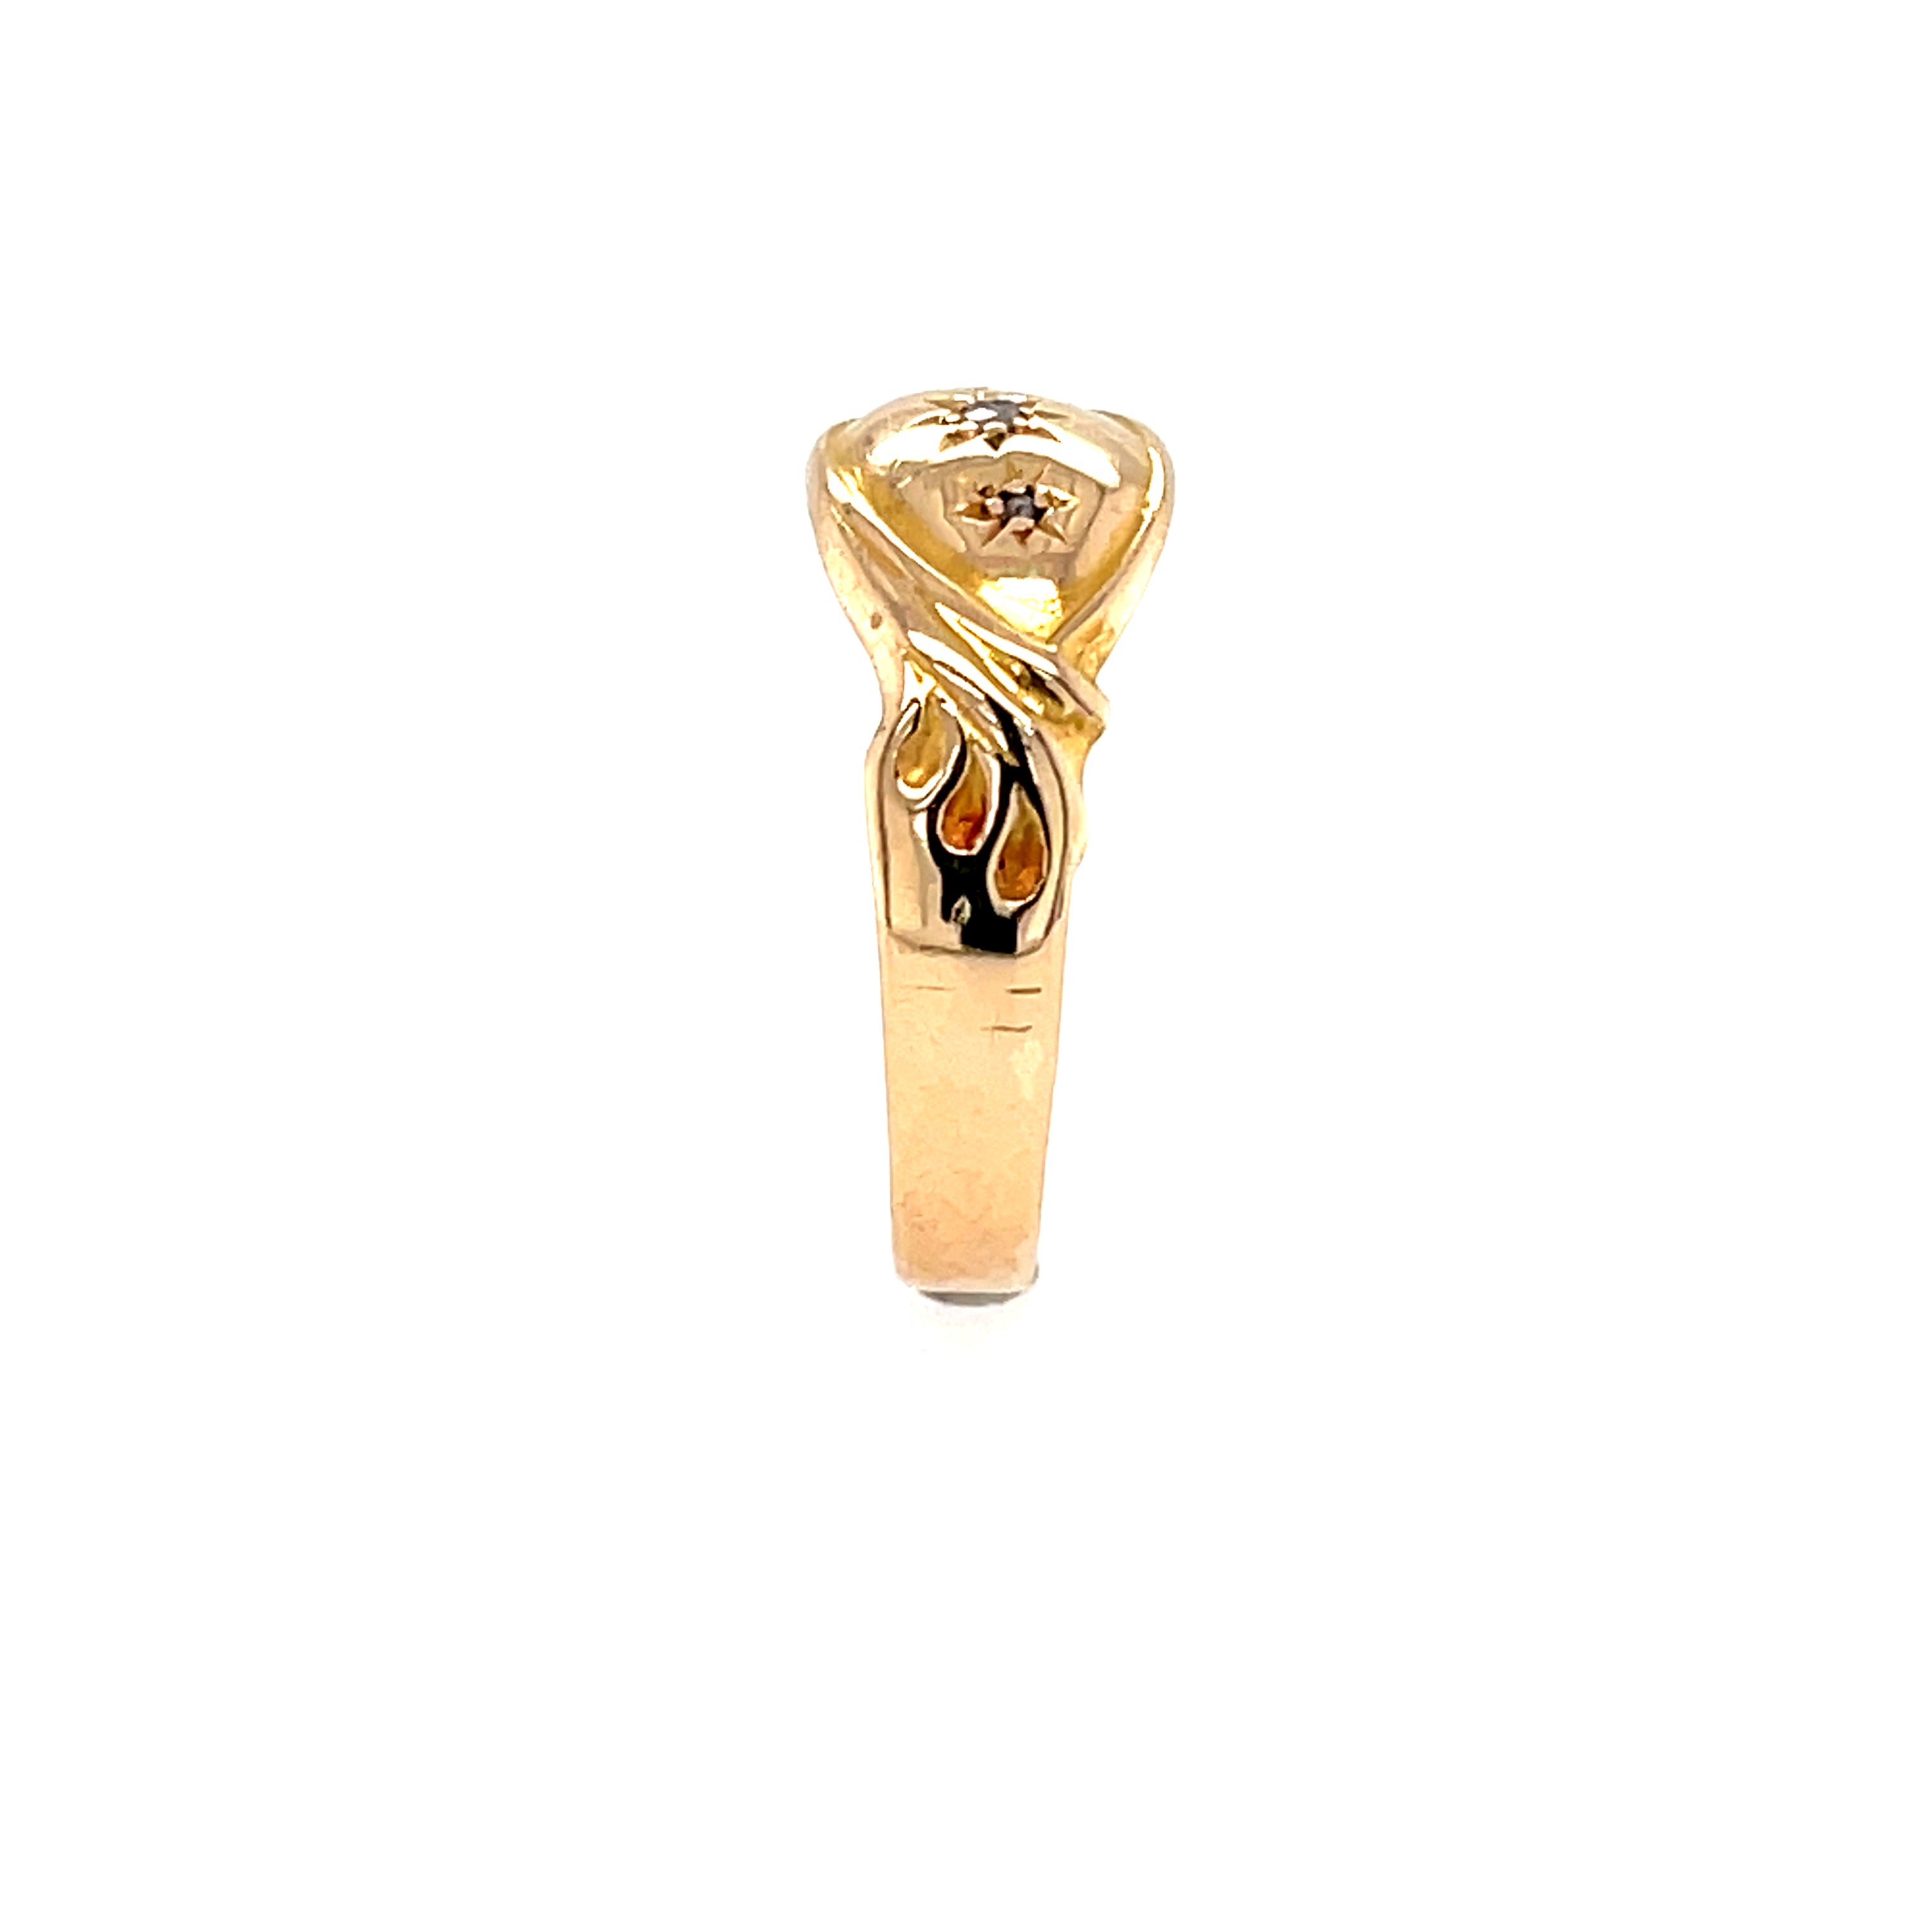 Edwardian 18ct Yellow Gold Diamond Set Ring 1902 Size M (UK) SOLD